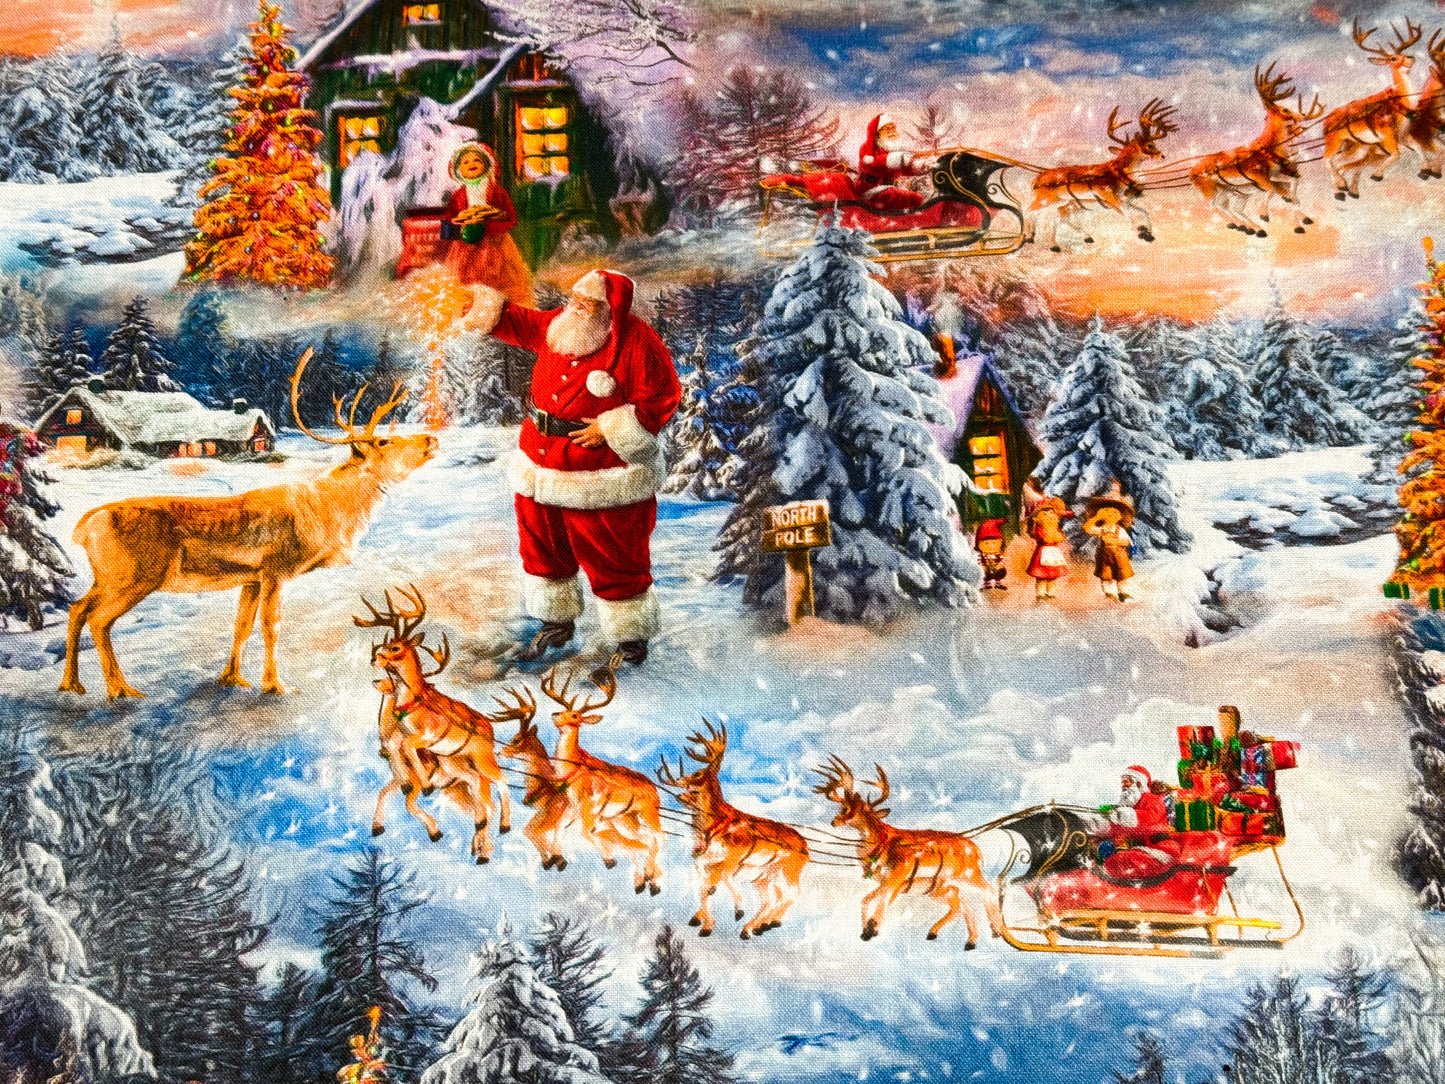 Snow White Christmas village Santa Claus fabric 3372 Santa and friends